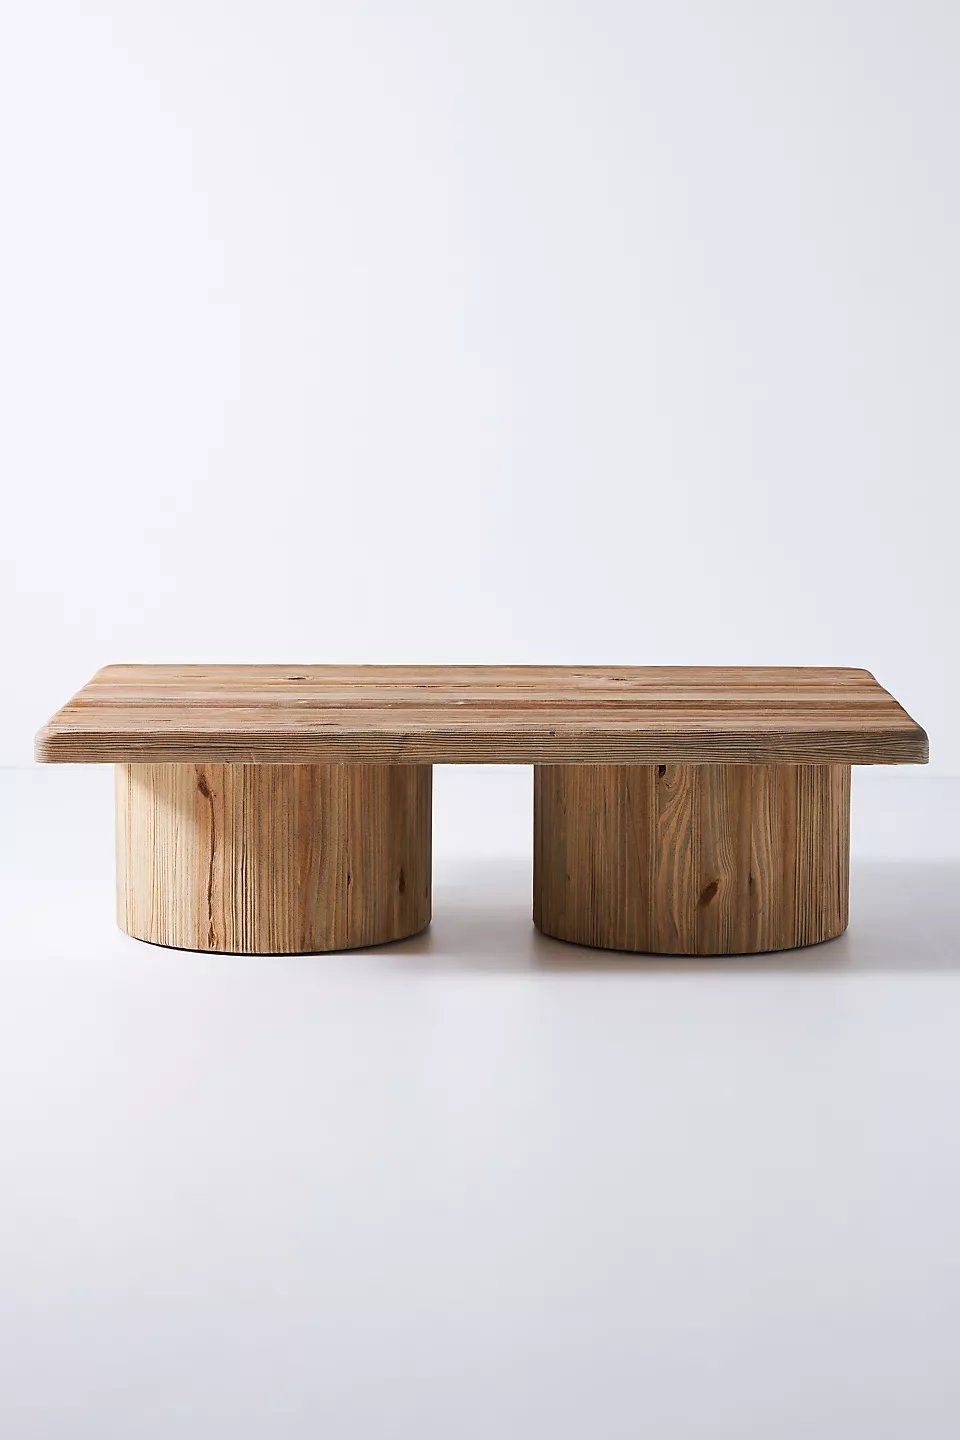 Margate Reclaimed Wood Coffee Table, Beige - Image 0